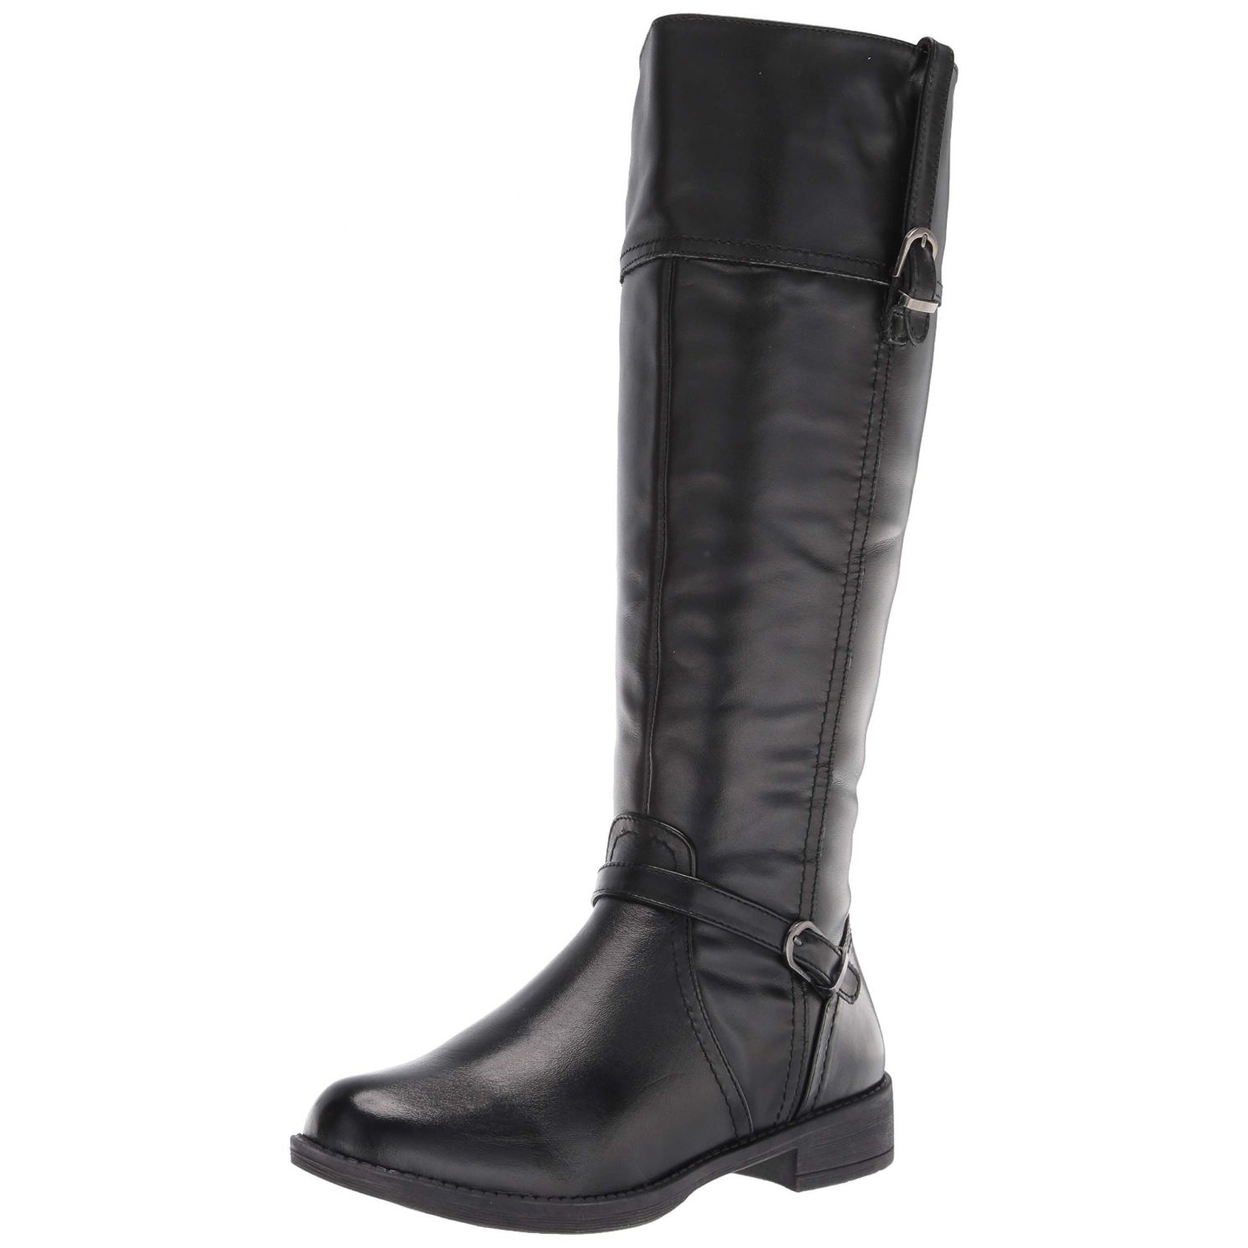 Propet Womens Tasha Zippered Casual Boots Knee High Low Heel 1-2 - Black BROWN - BROWN, 9 Wide